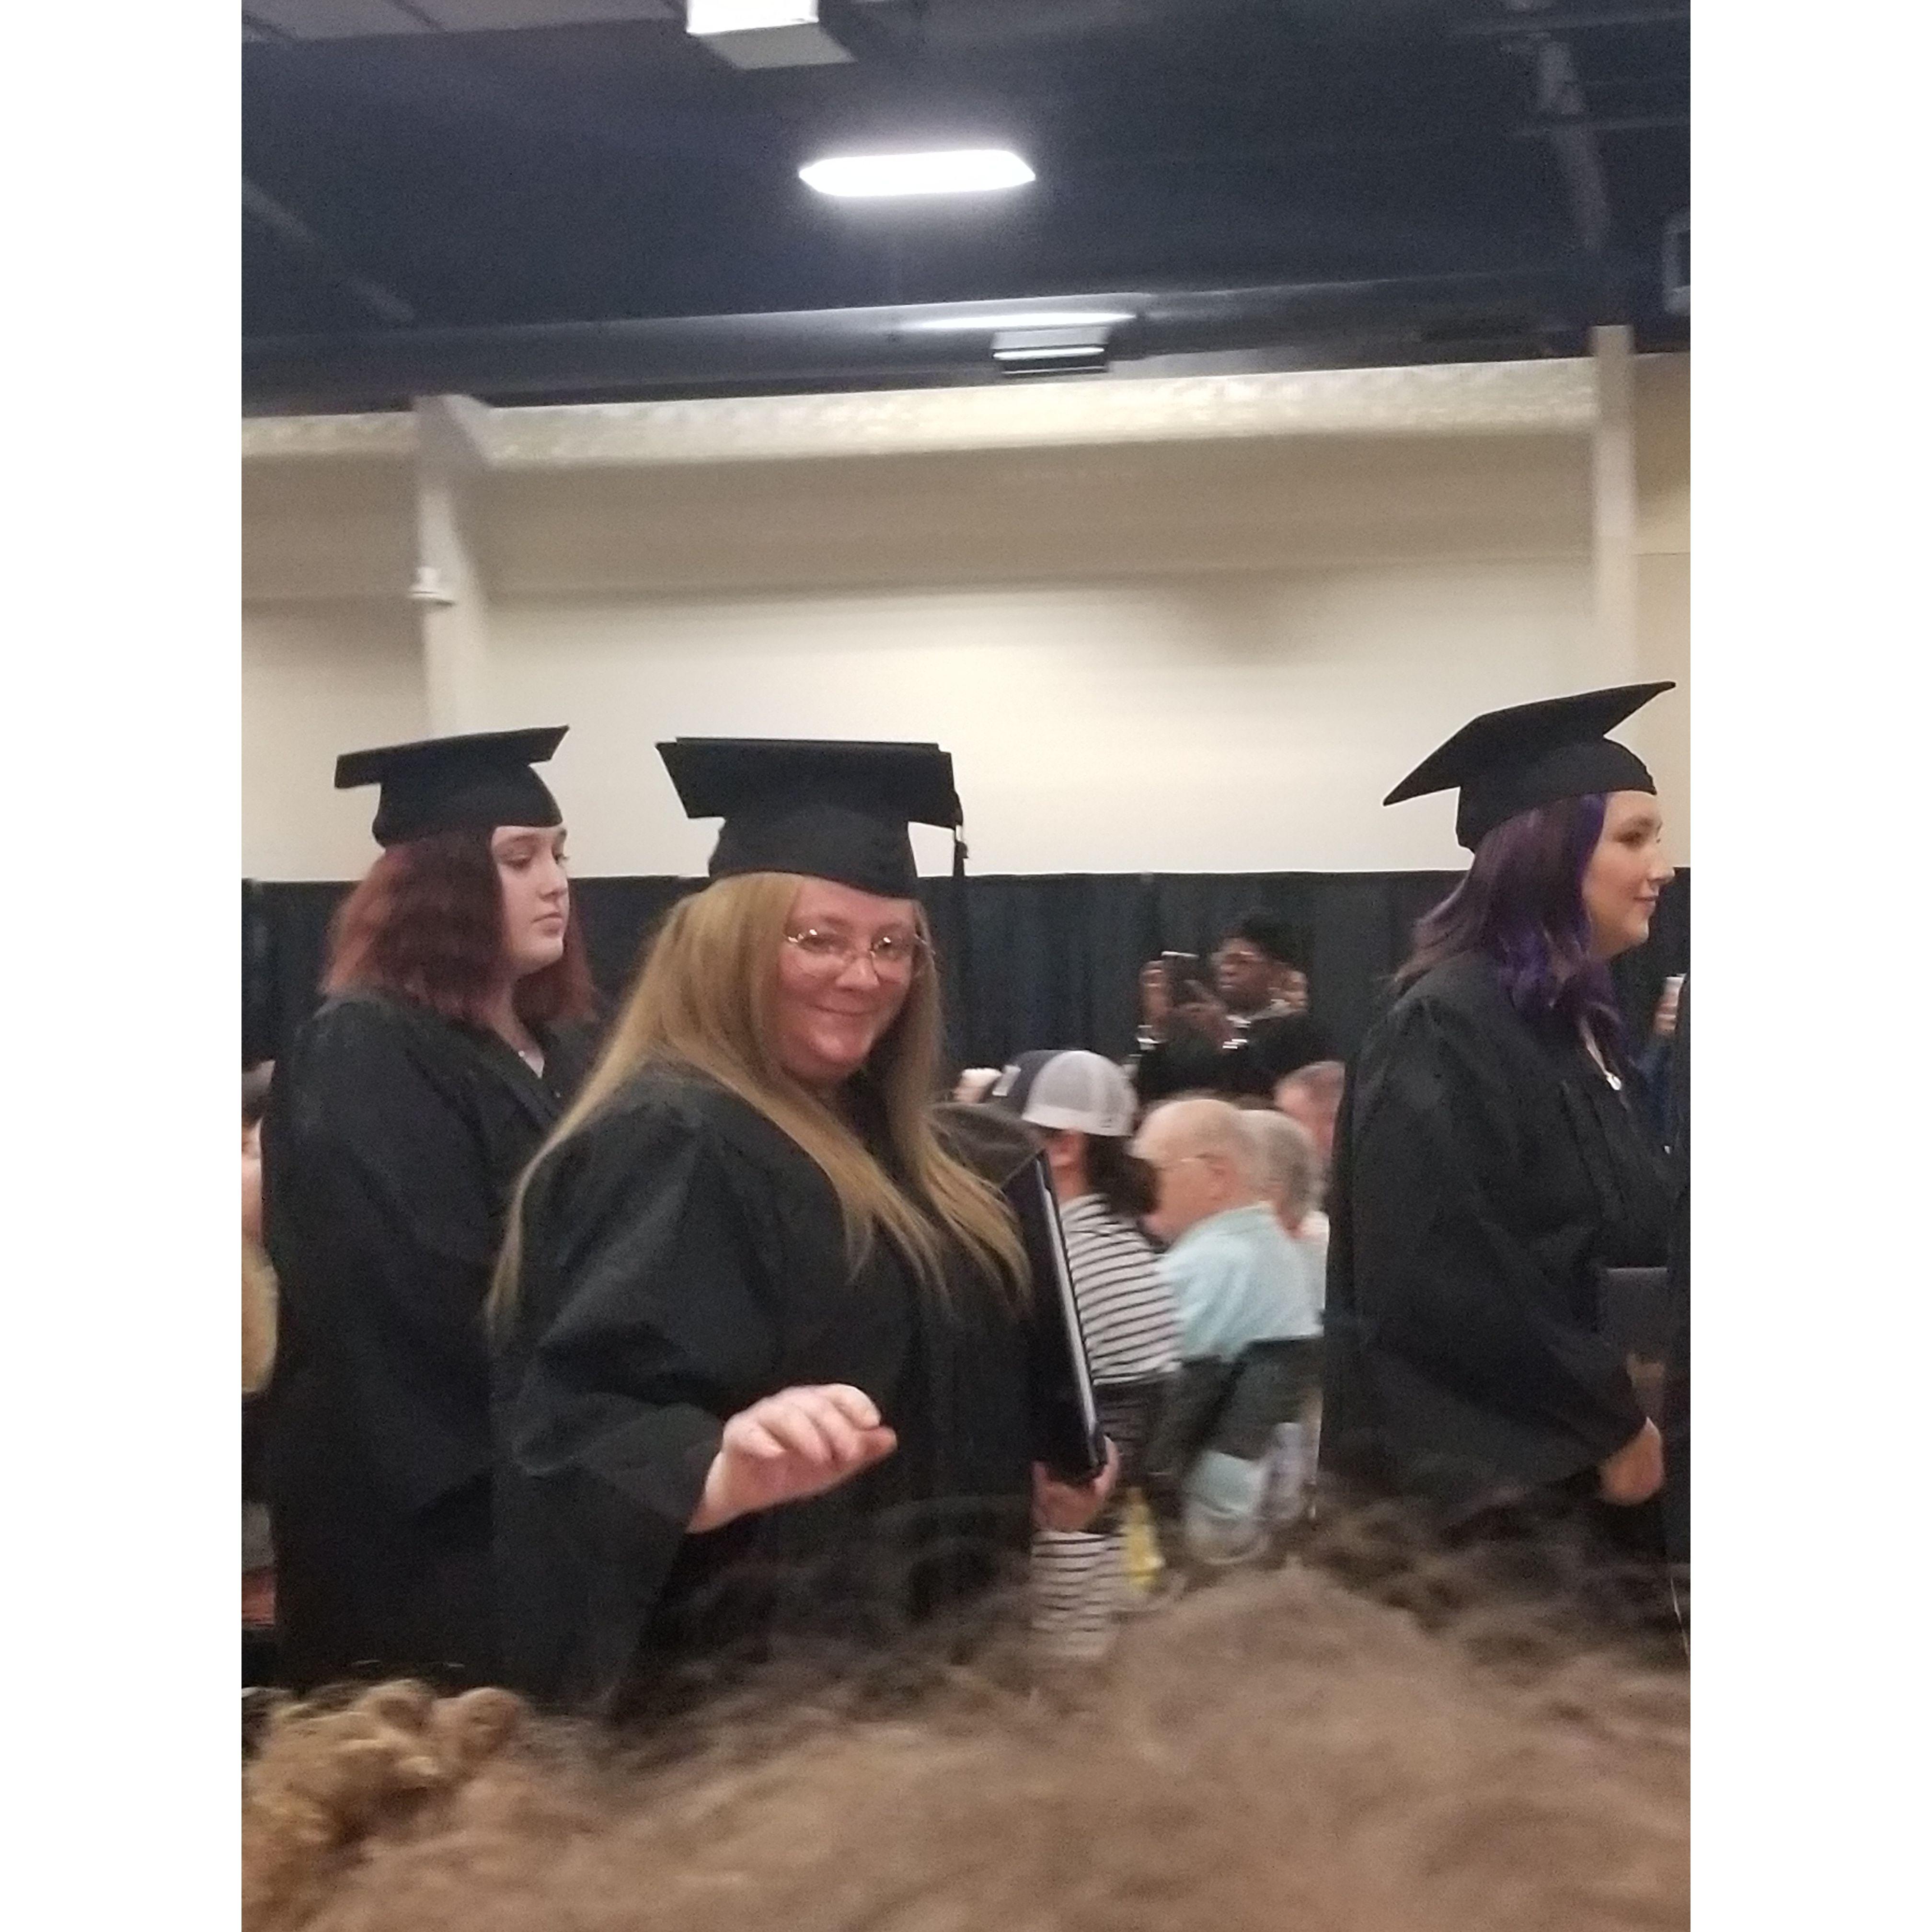 Rachel got that degree